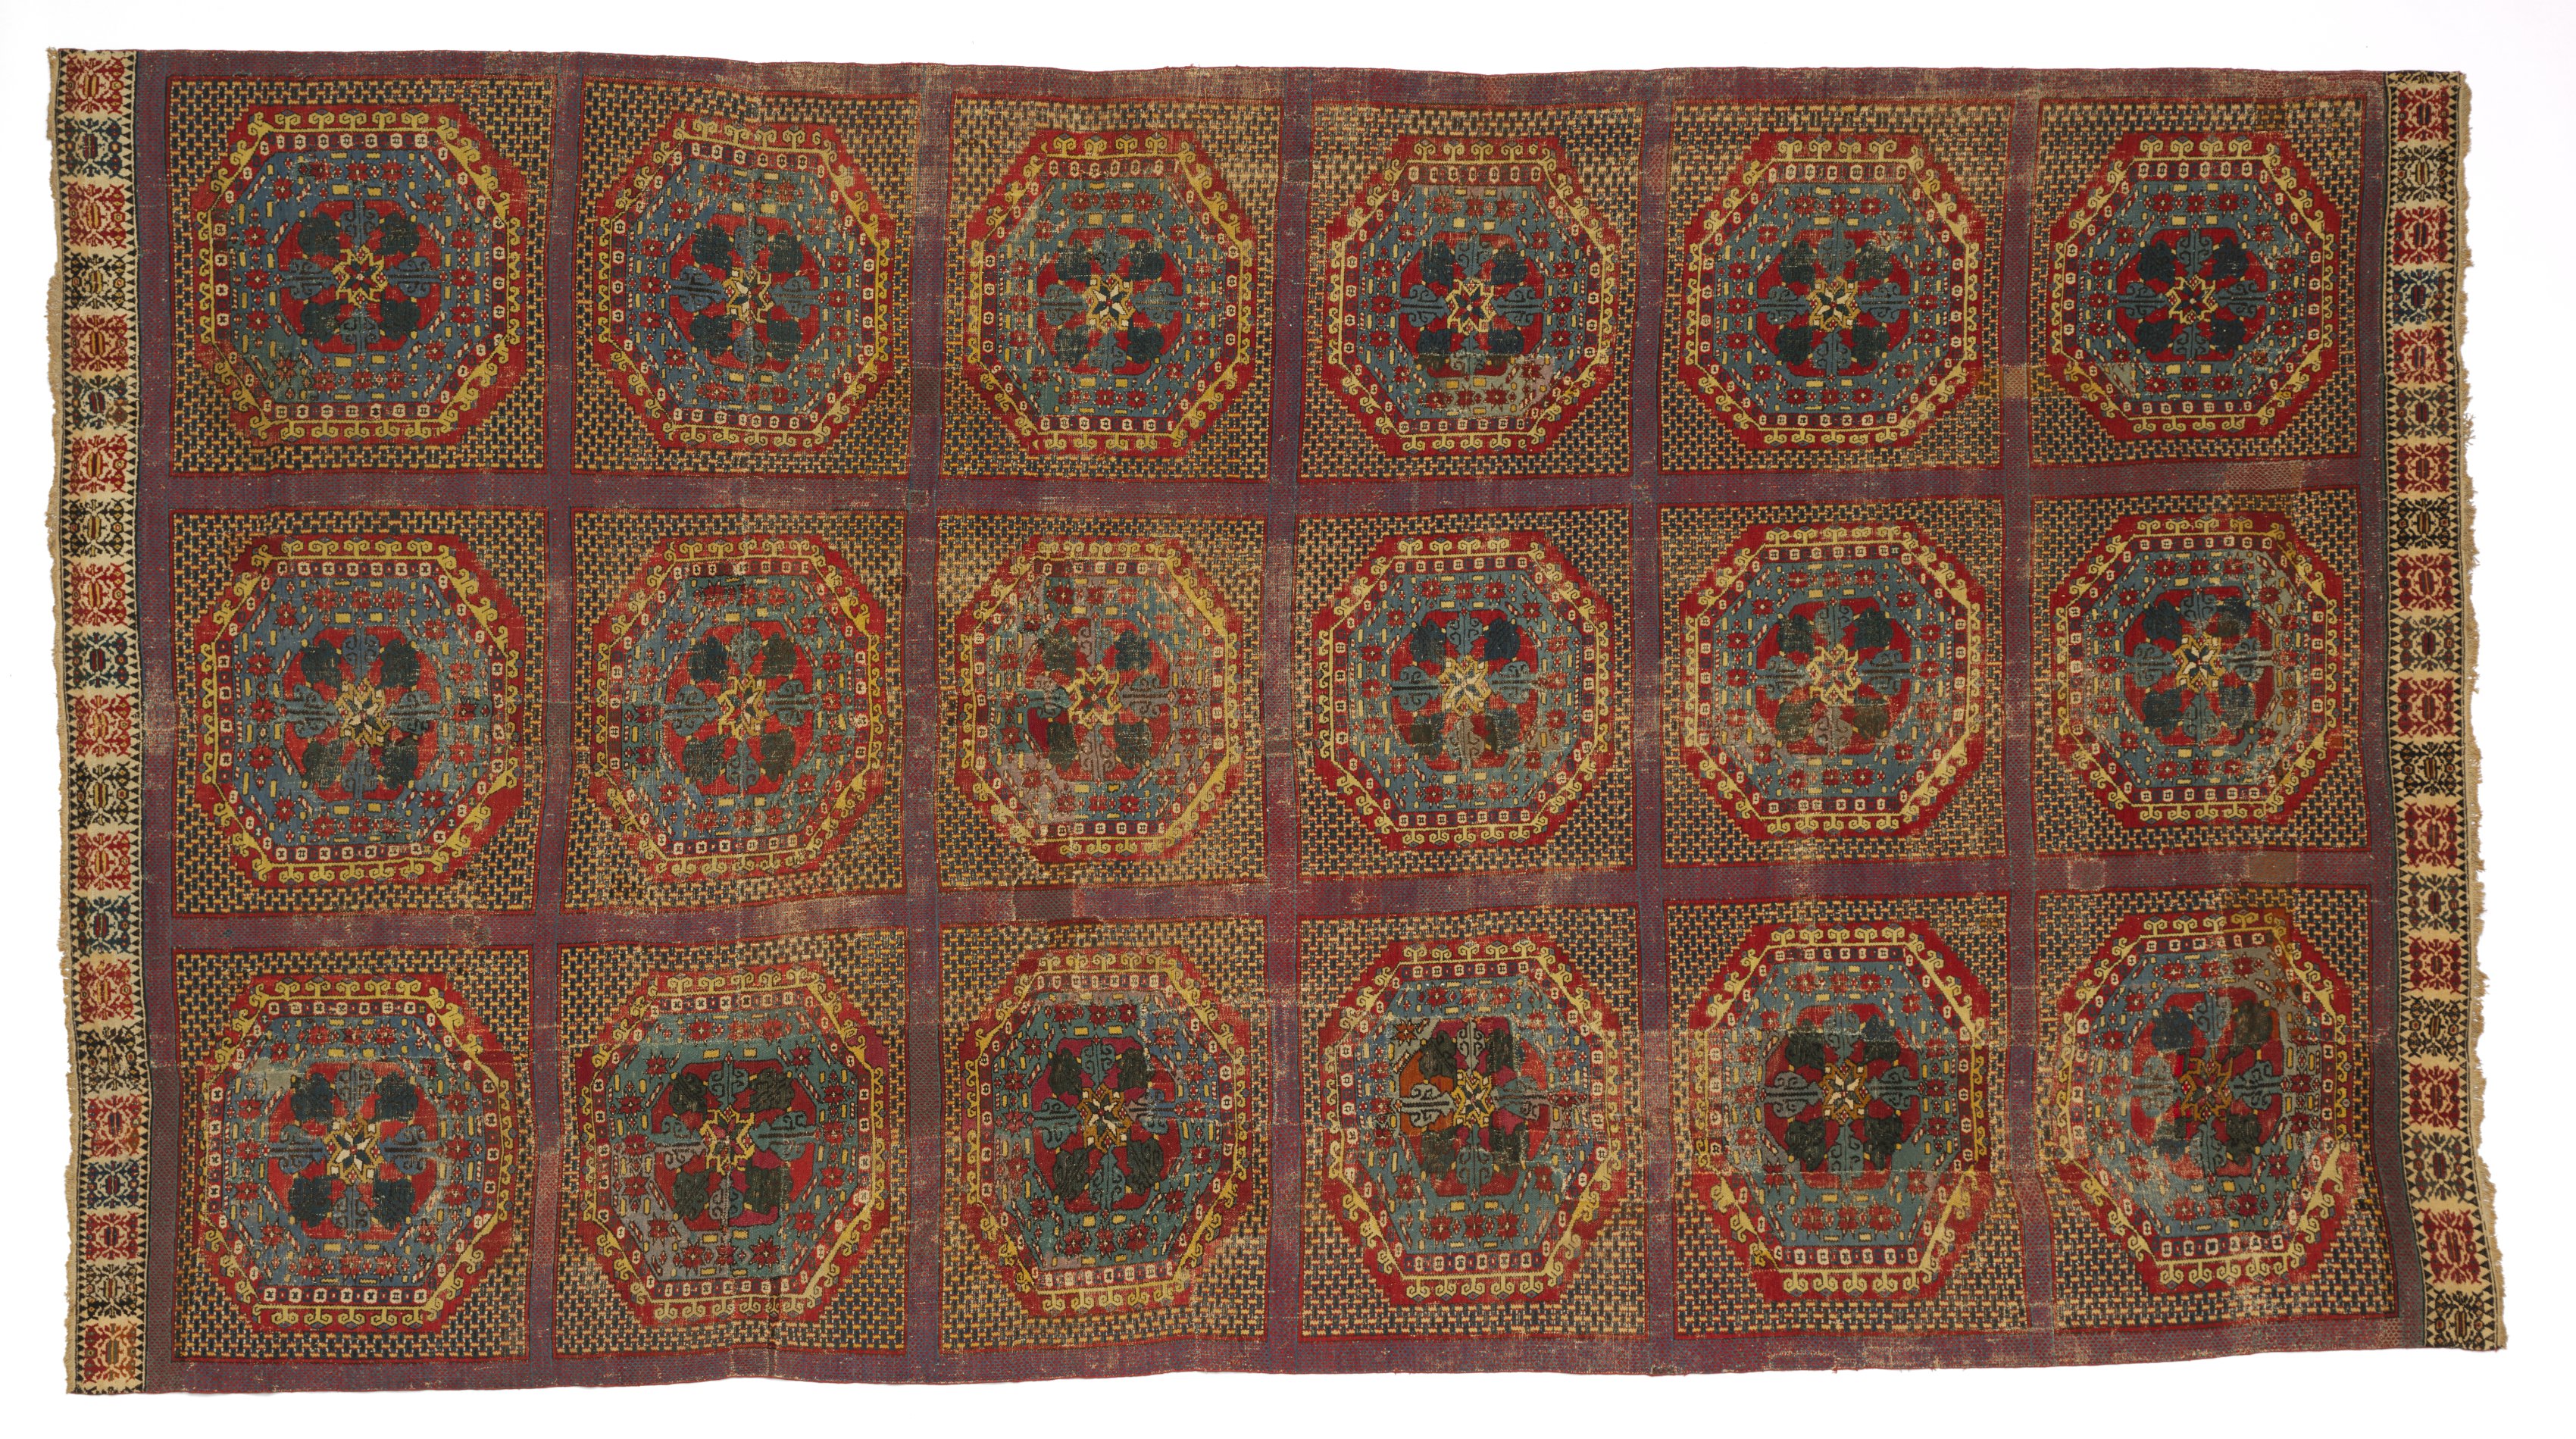 Spanish Carpet with a Turkish Pattern